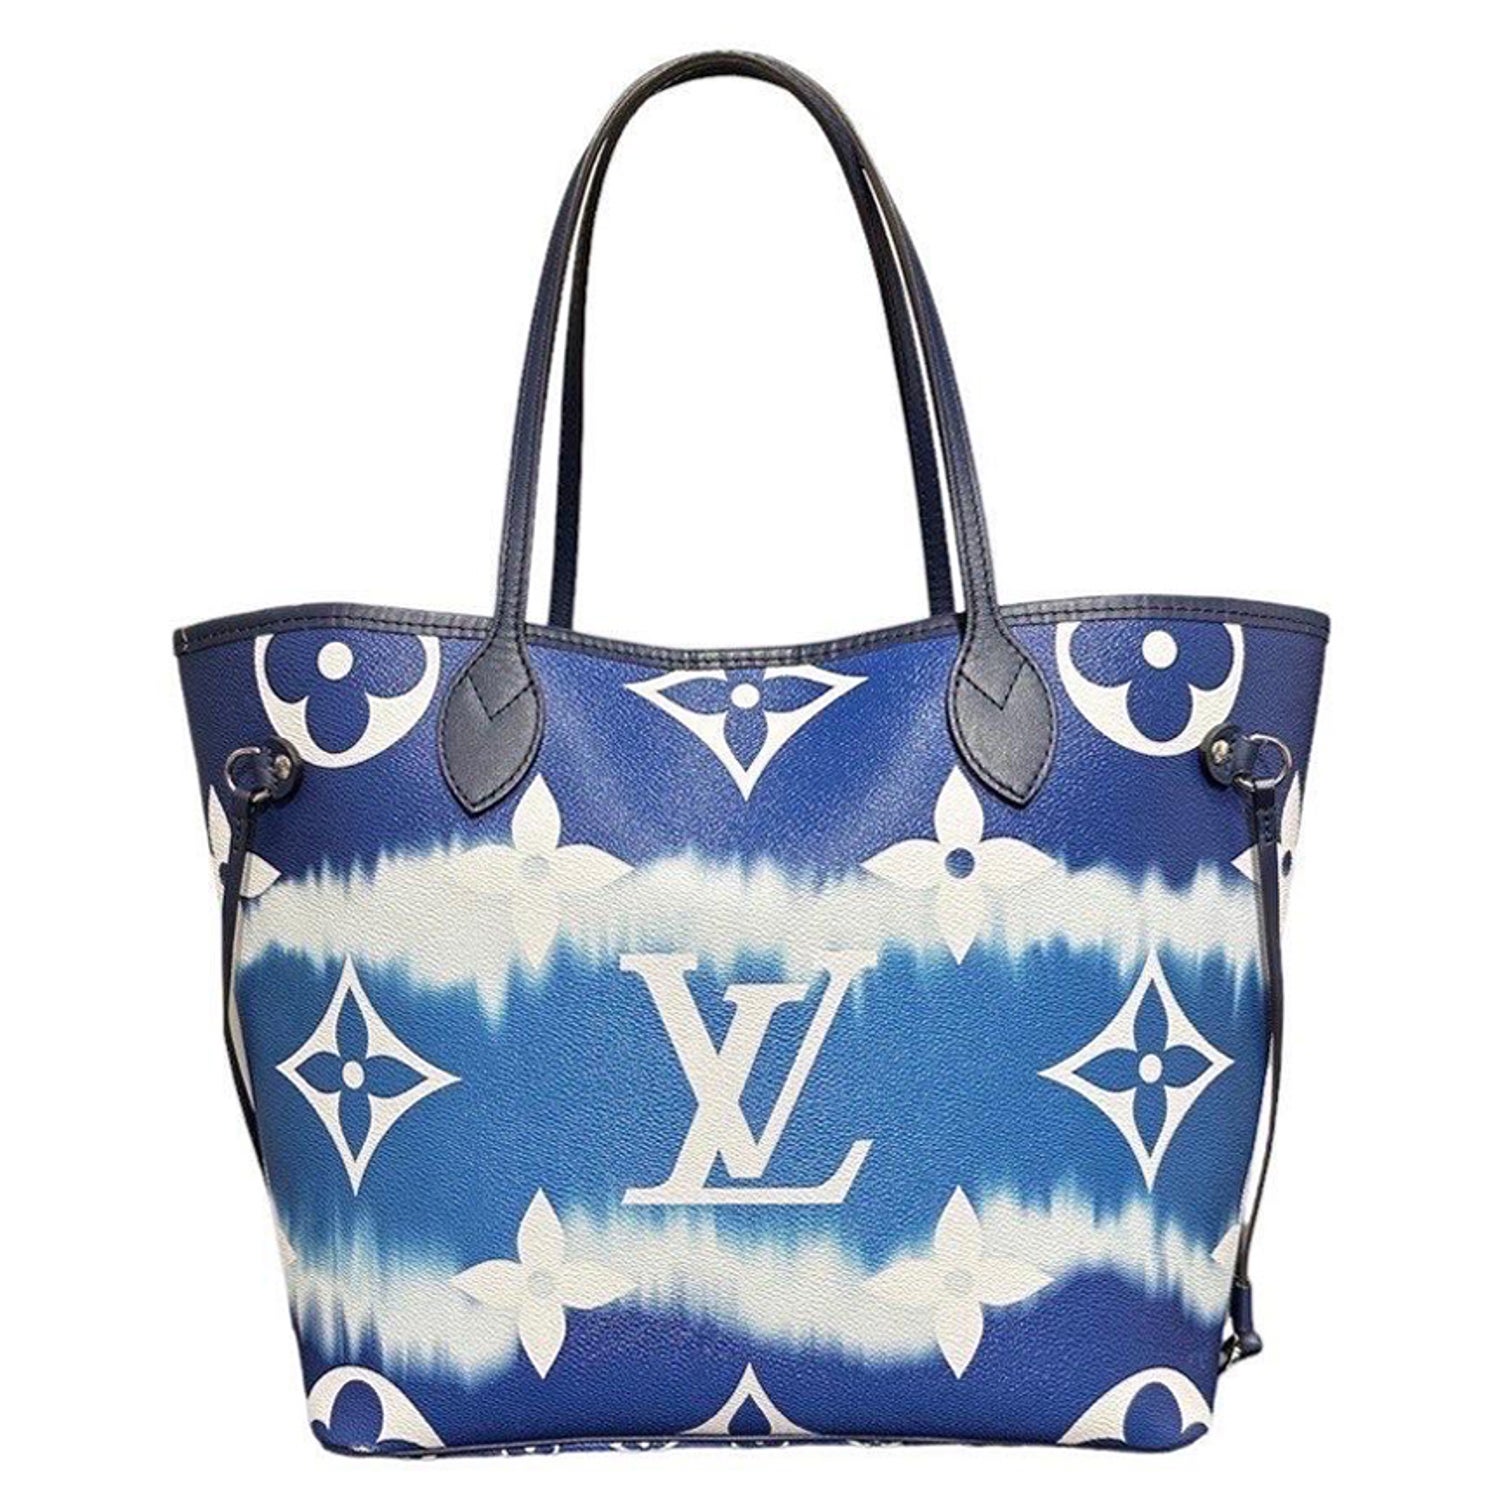 Louis Vuitton - Authenticated Neverfull Handbag - Cotton Multicolour for Women, Very Good Condition